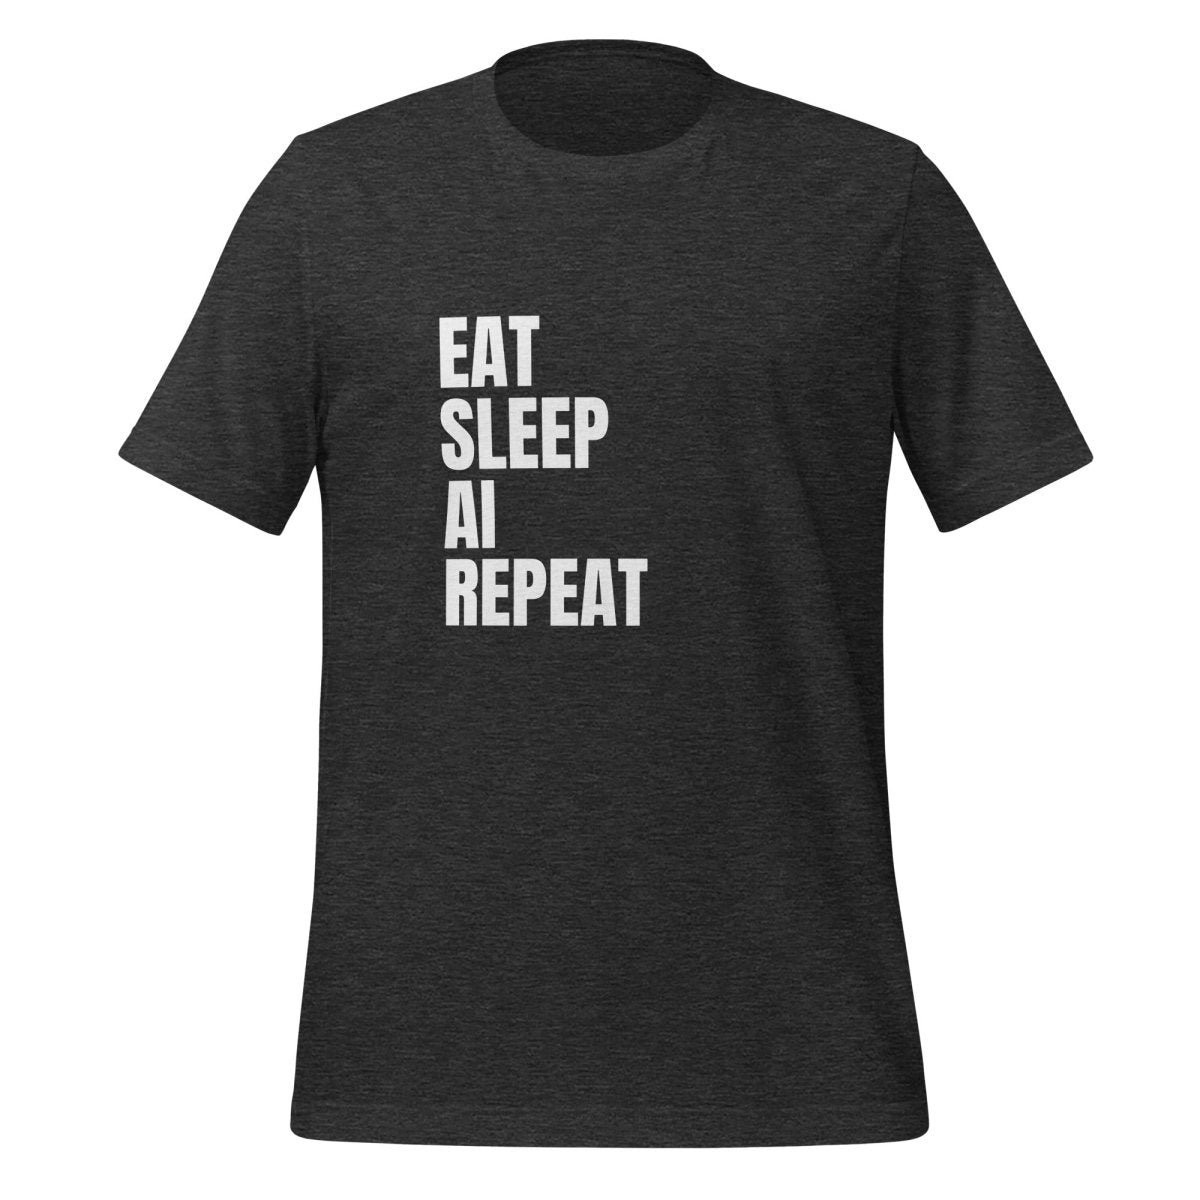 EAT SLEEP AI REPEAT T - Shirt 1 (unisex) - Dark Grey Heather - AI Store